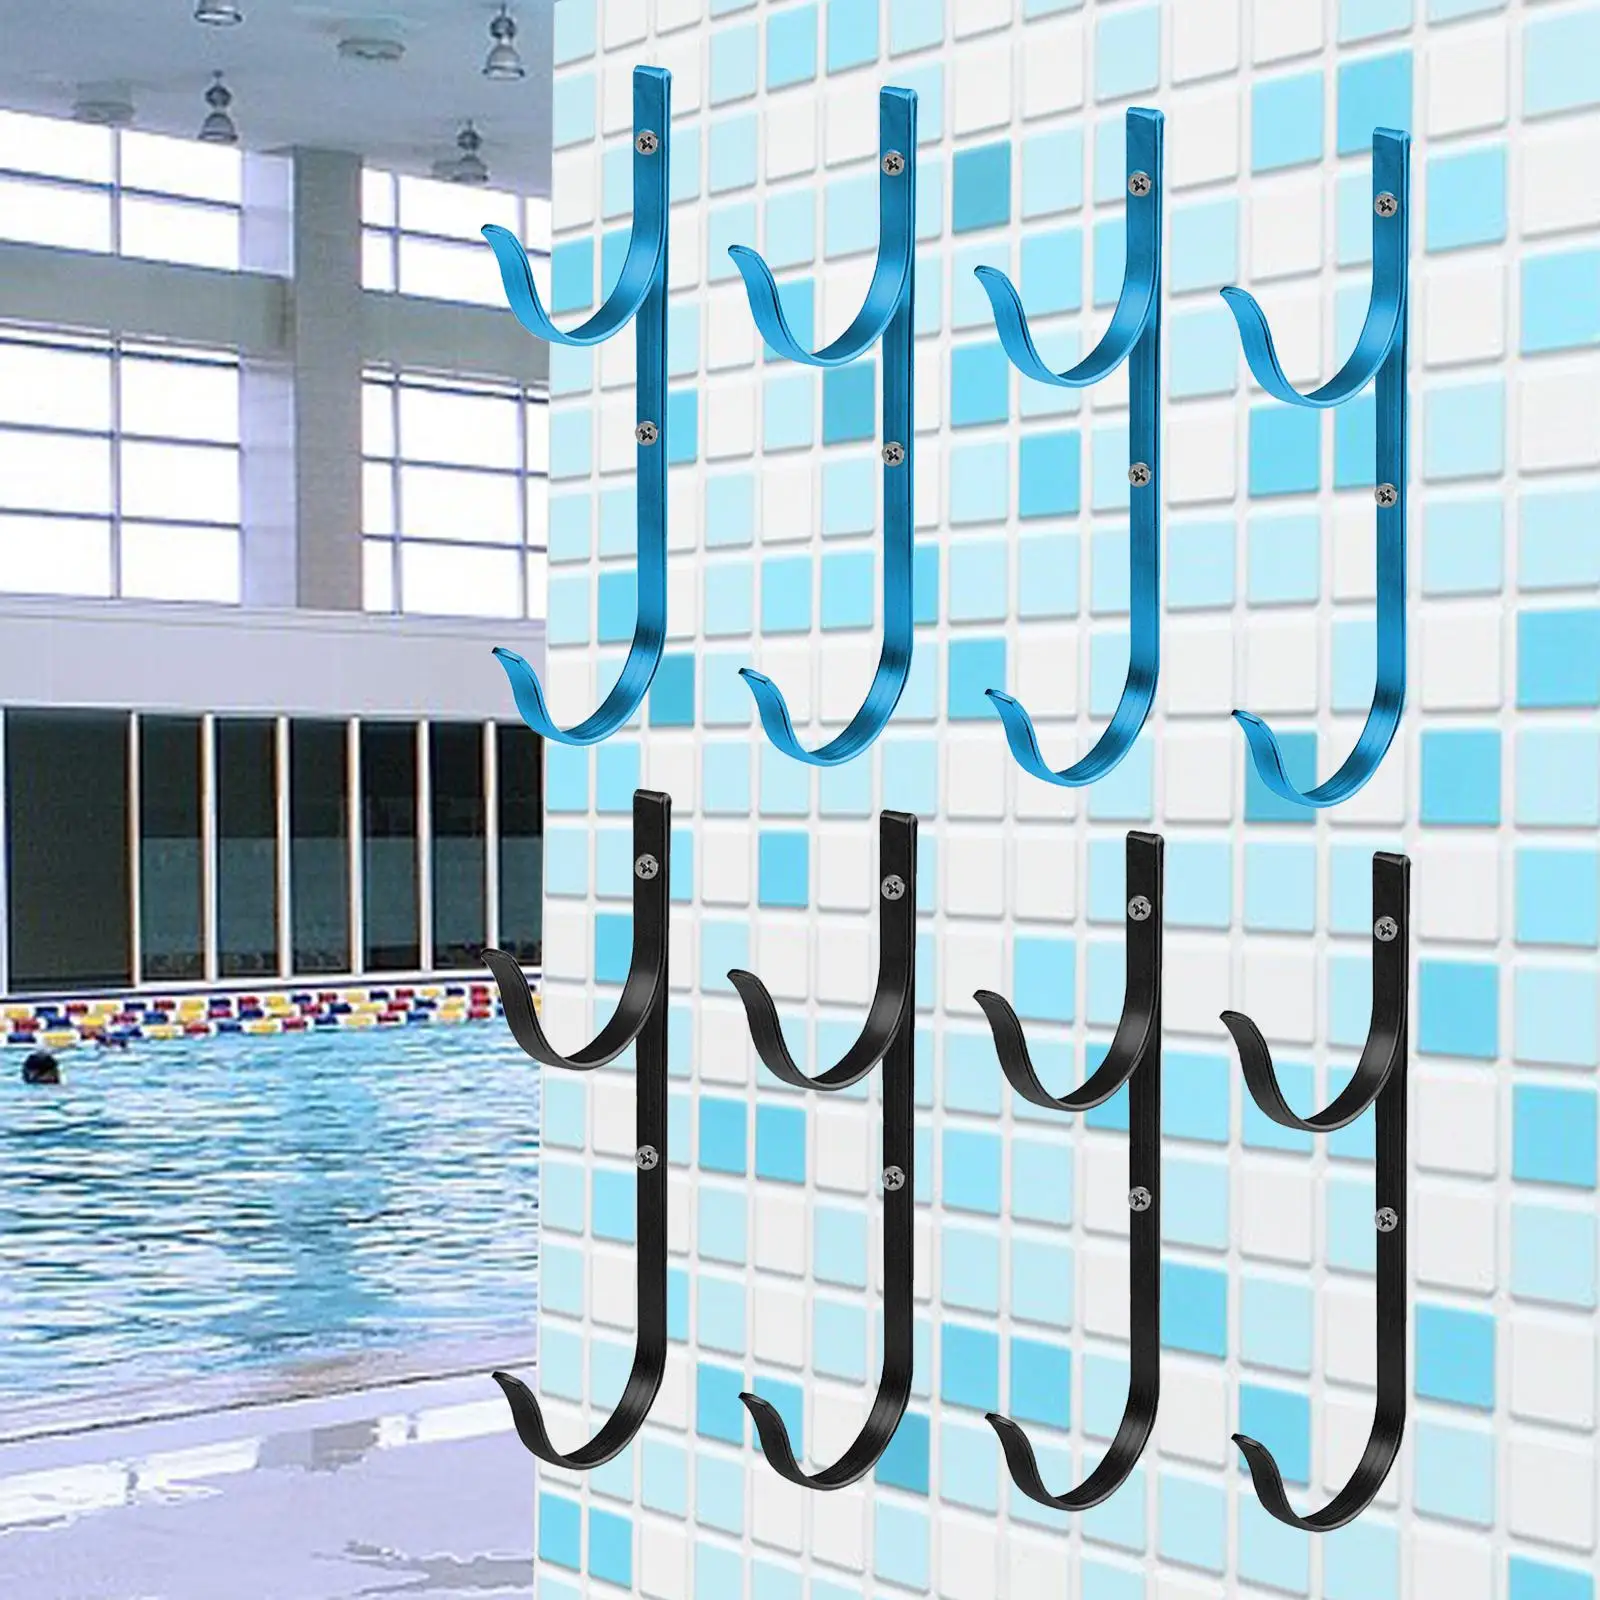 4x Multipurpose Pool  Hangers with Screws Holder Pool Equipment Hooks for Brushes Water Treatment Tools Leaf Rakes 